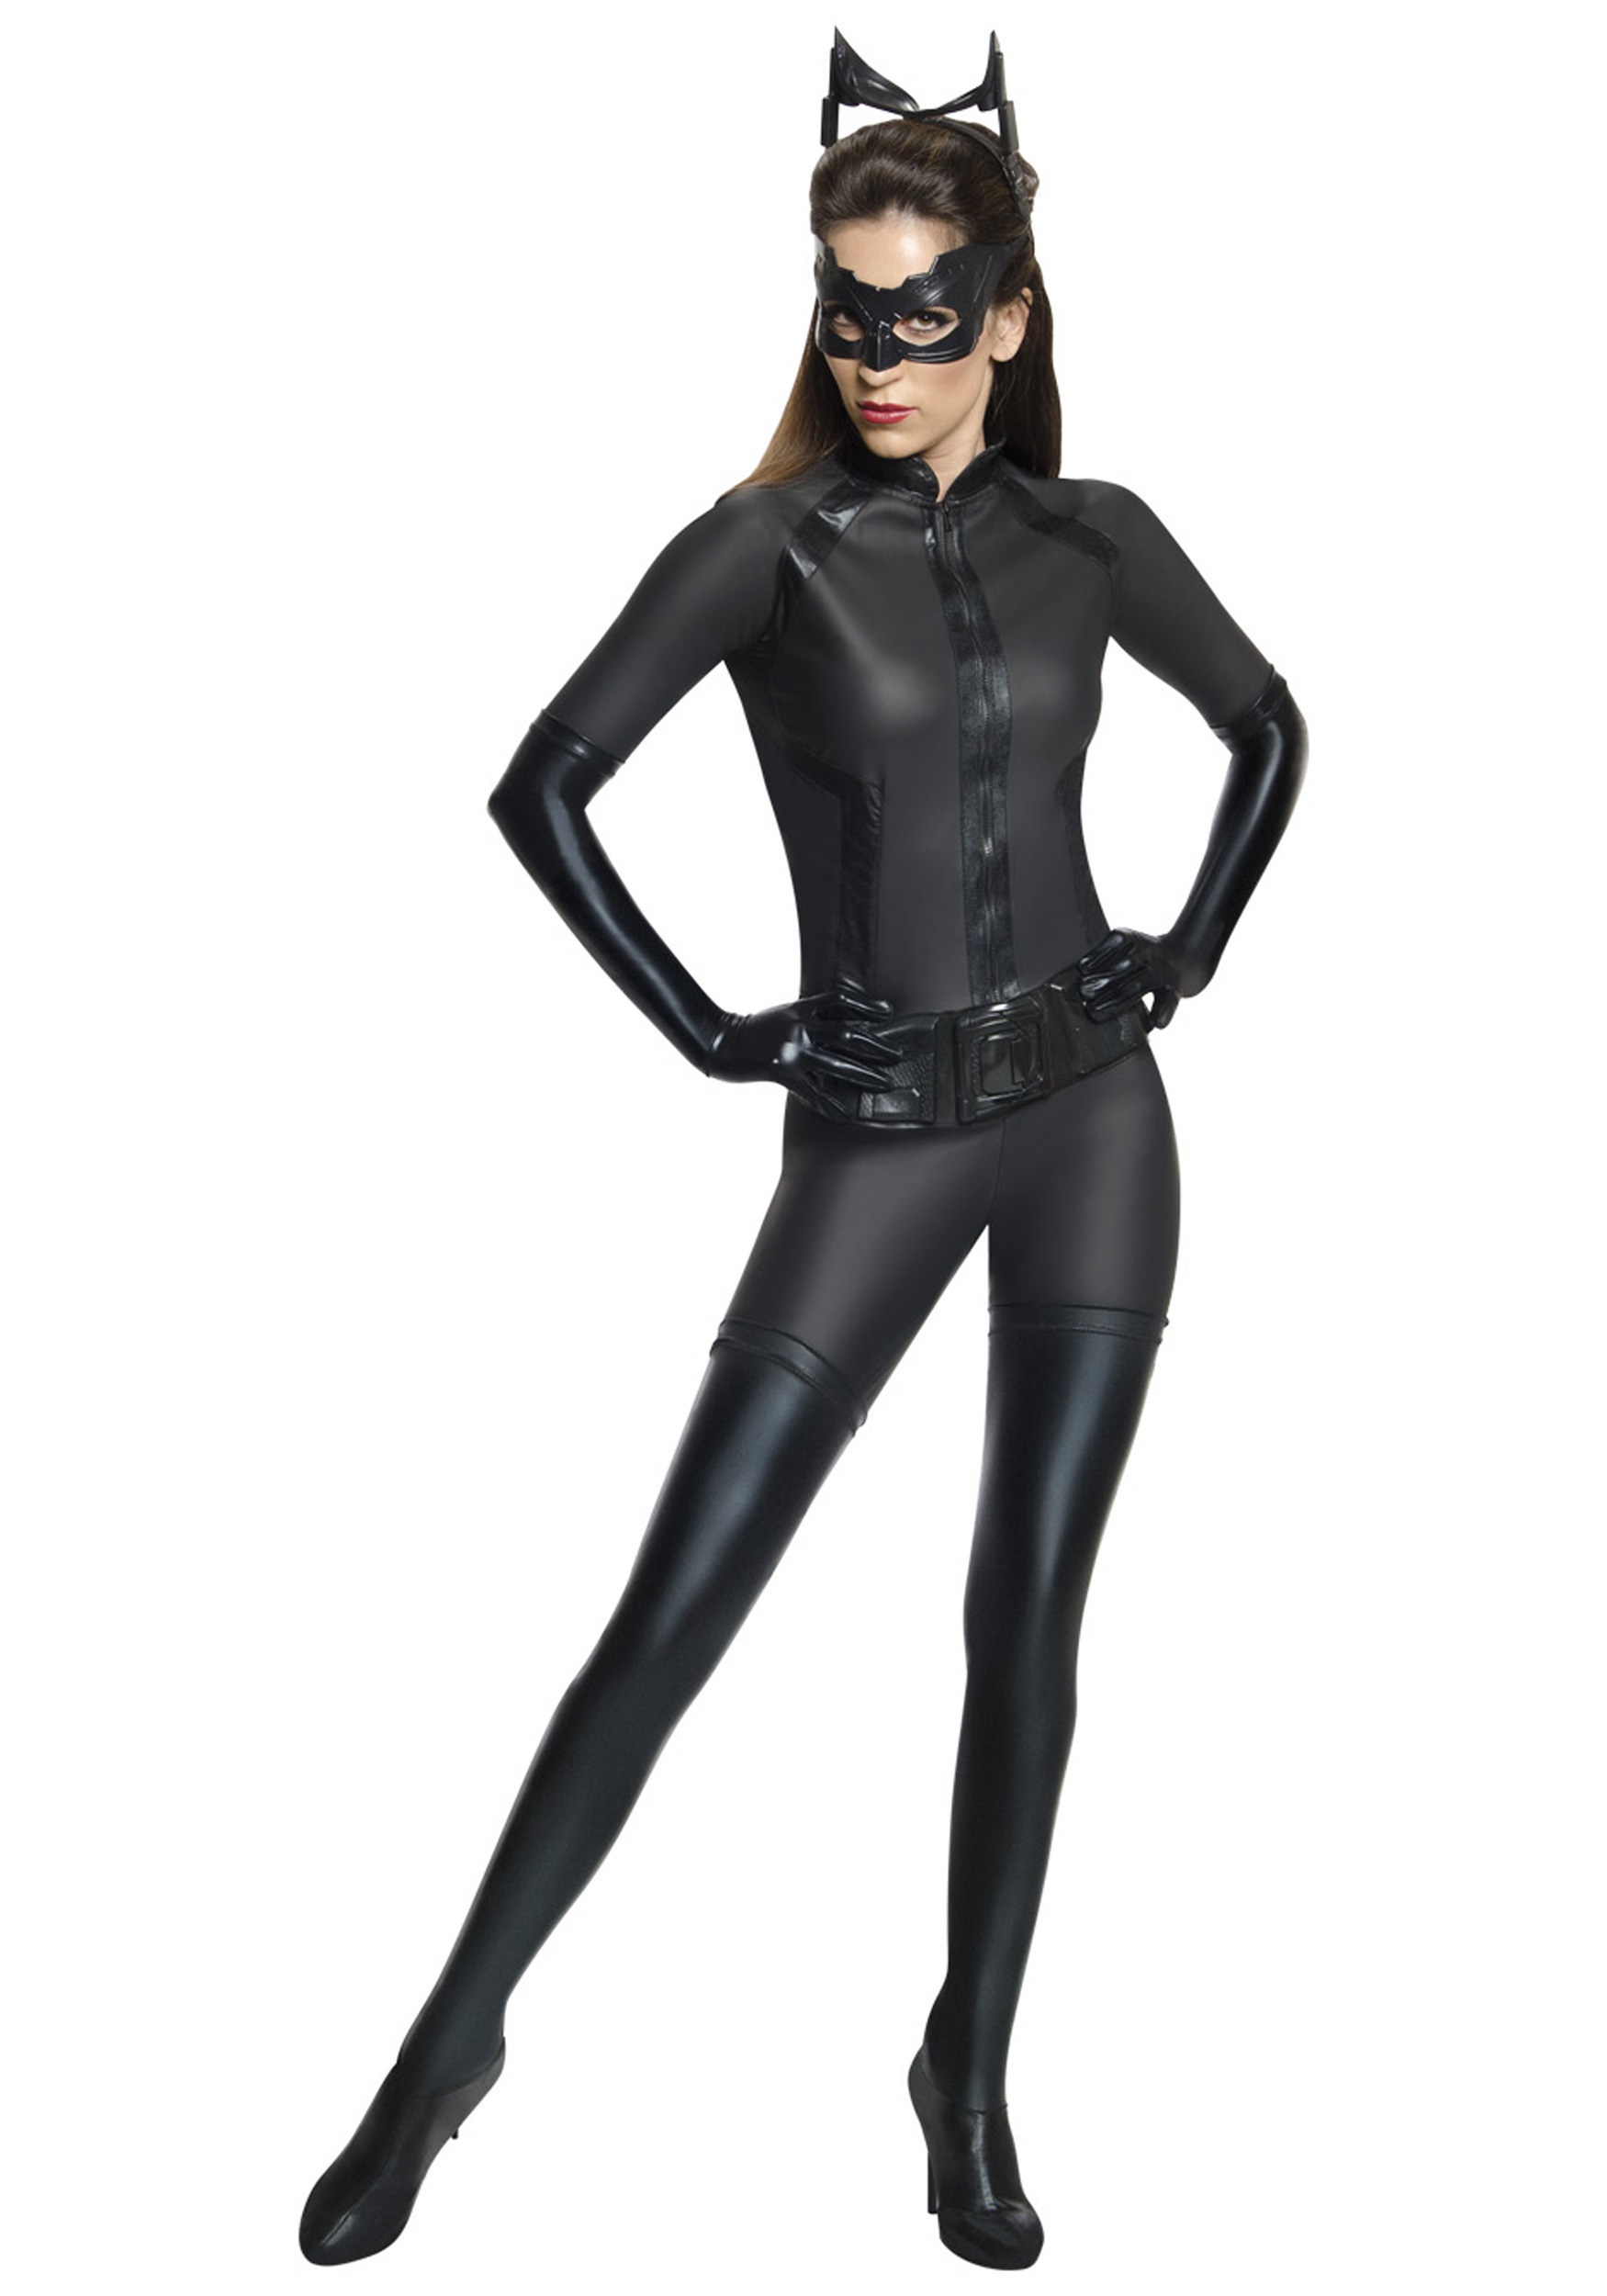 Grand Heritage Catwoman Costume Halloween Costume Ideas 2019